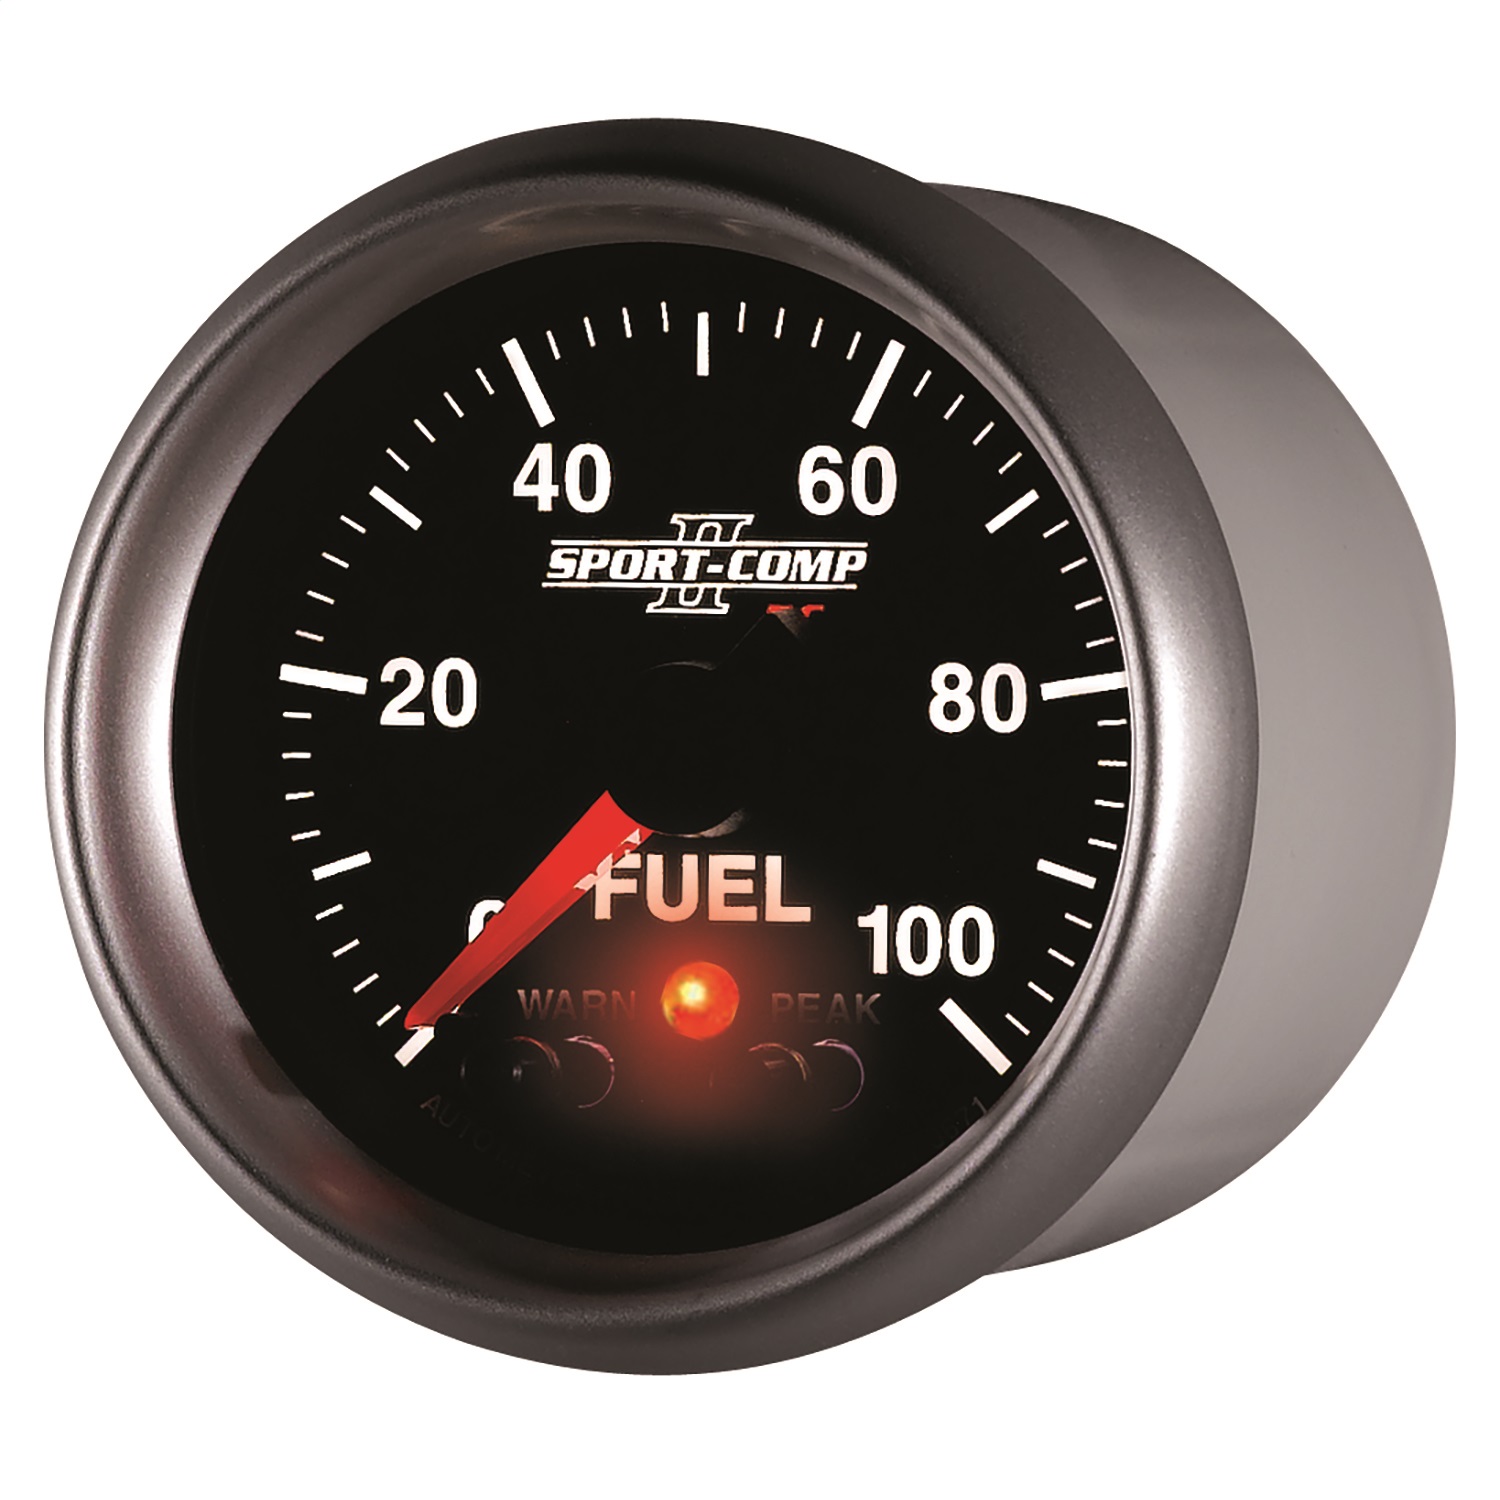 AutoMeter 3671 Sport-Comp II Electric Fuel Pressure Gauge